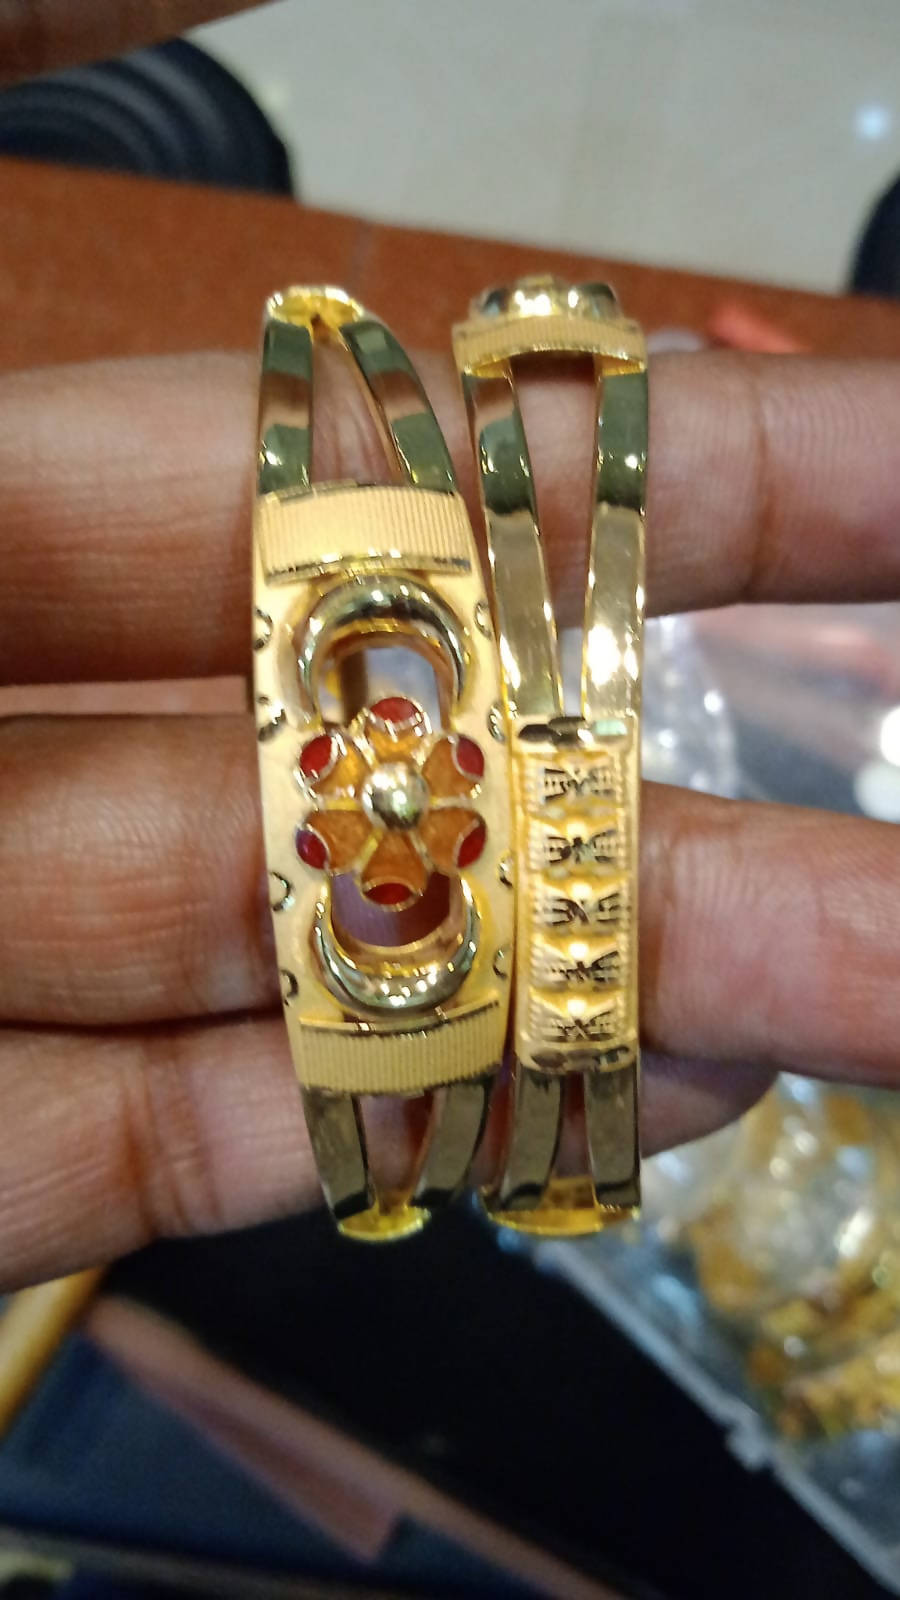 Gold Bangles Sarafa Bazar India